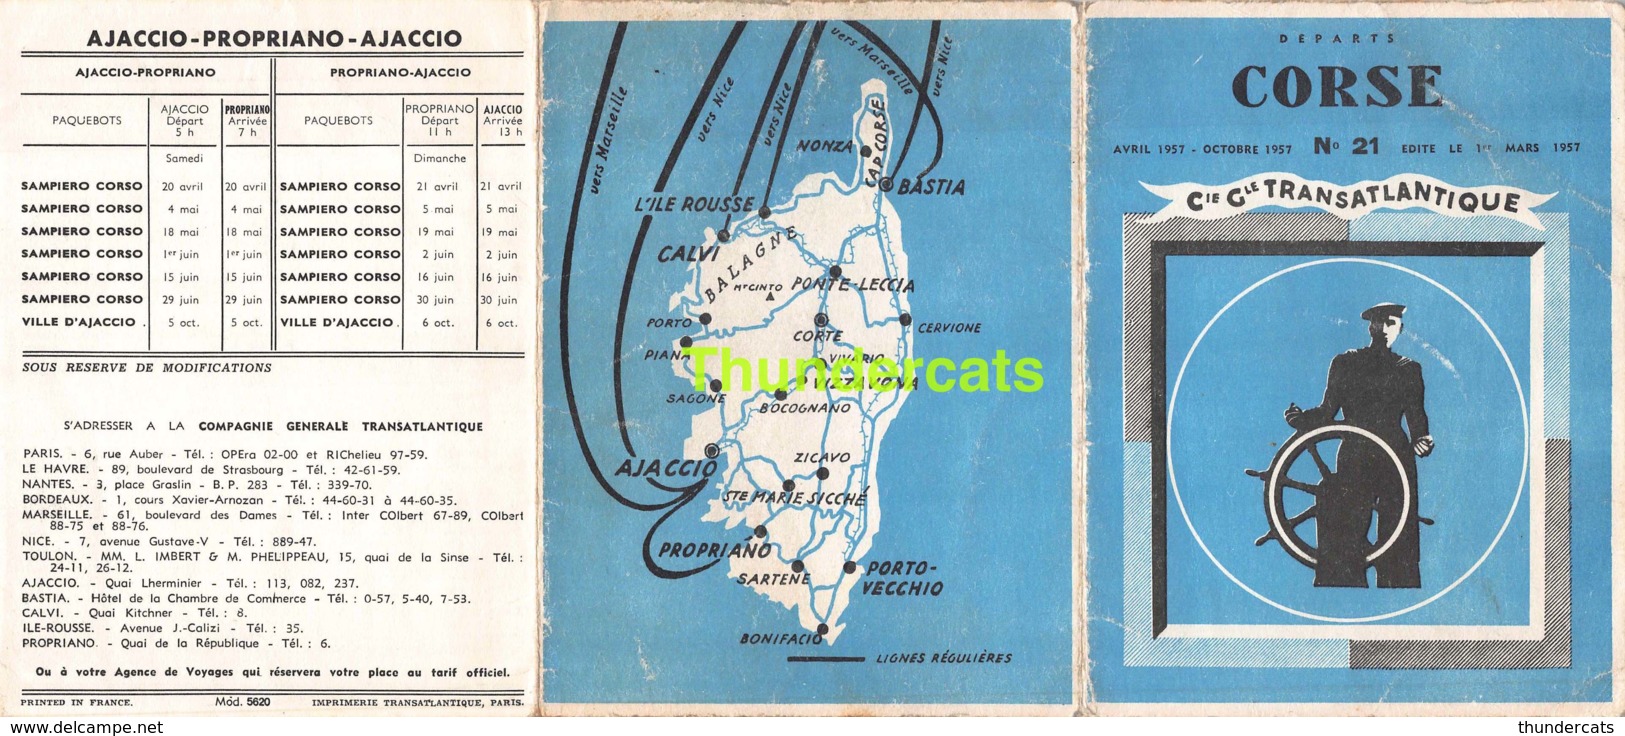 DEPLIANT BROHURE DEPARTS CORSE AVRIL 1957 OCTOBRE 1957 COMPAGNIE TRANSATLANTIQUE - Europe